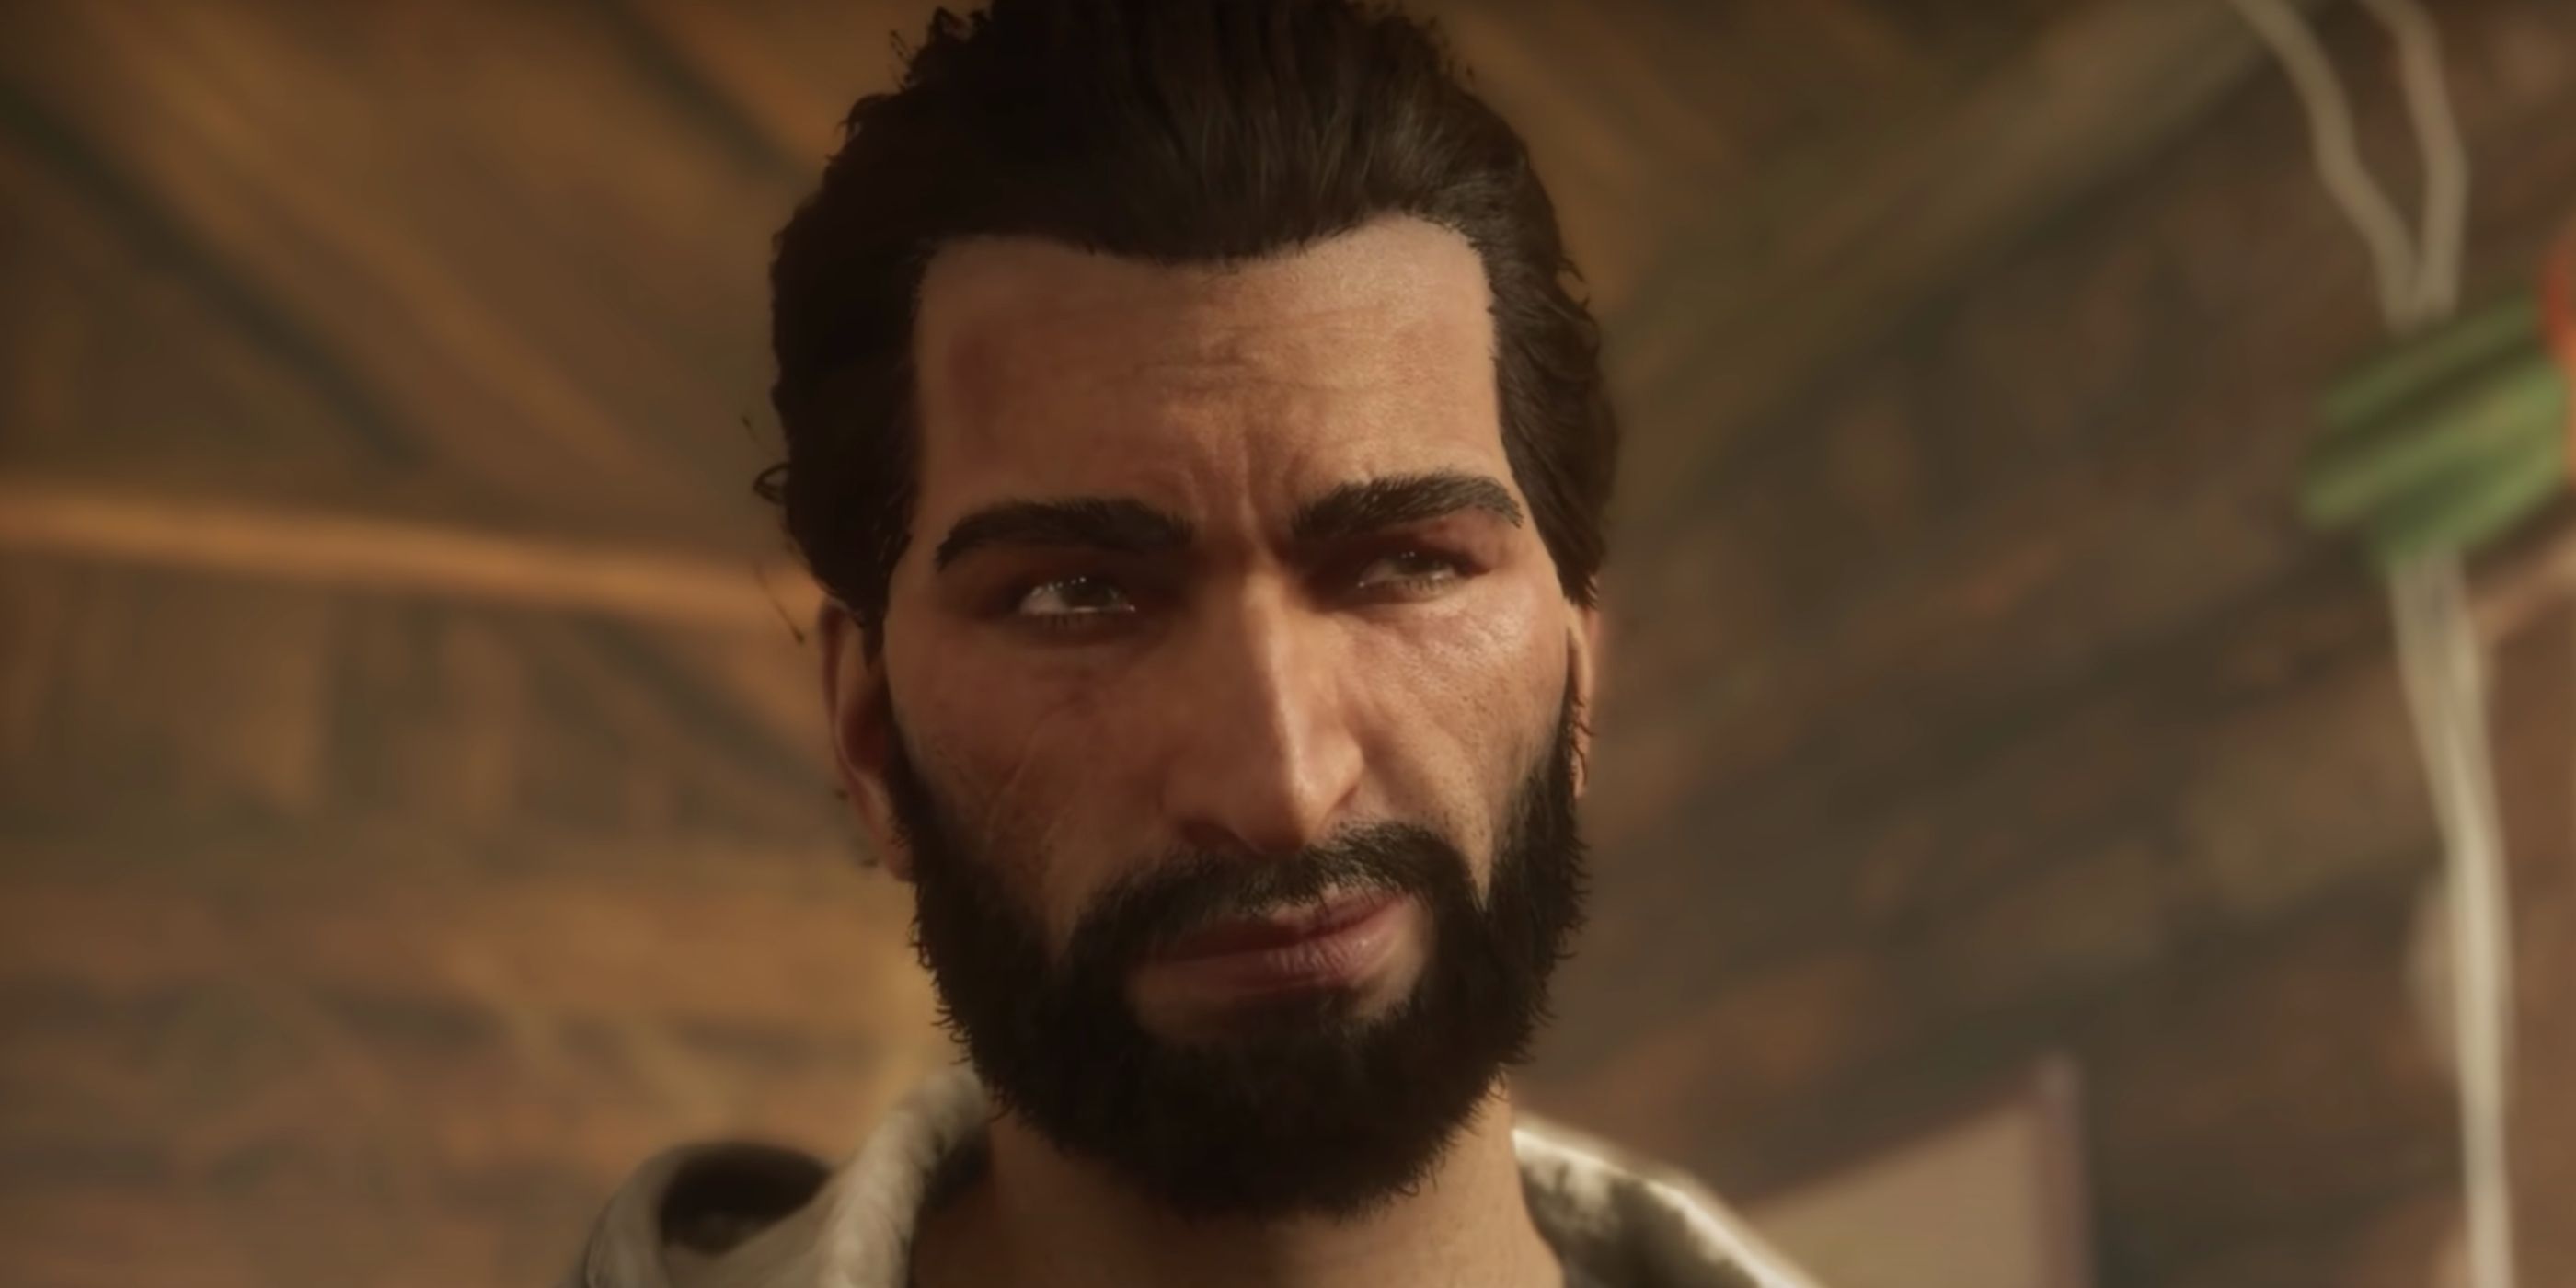 Basim tersenyum ke arah kamera di Assassin's Creed Valhalla.